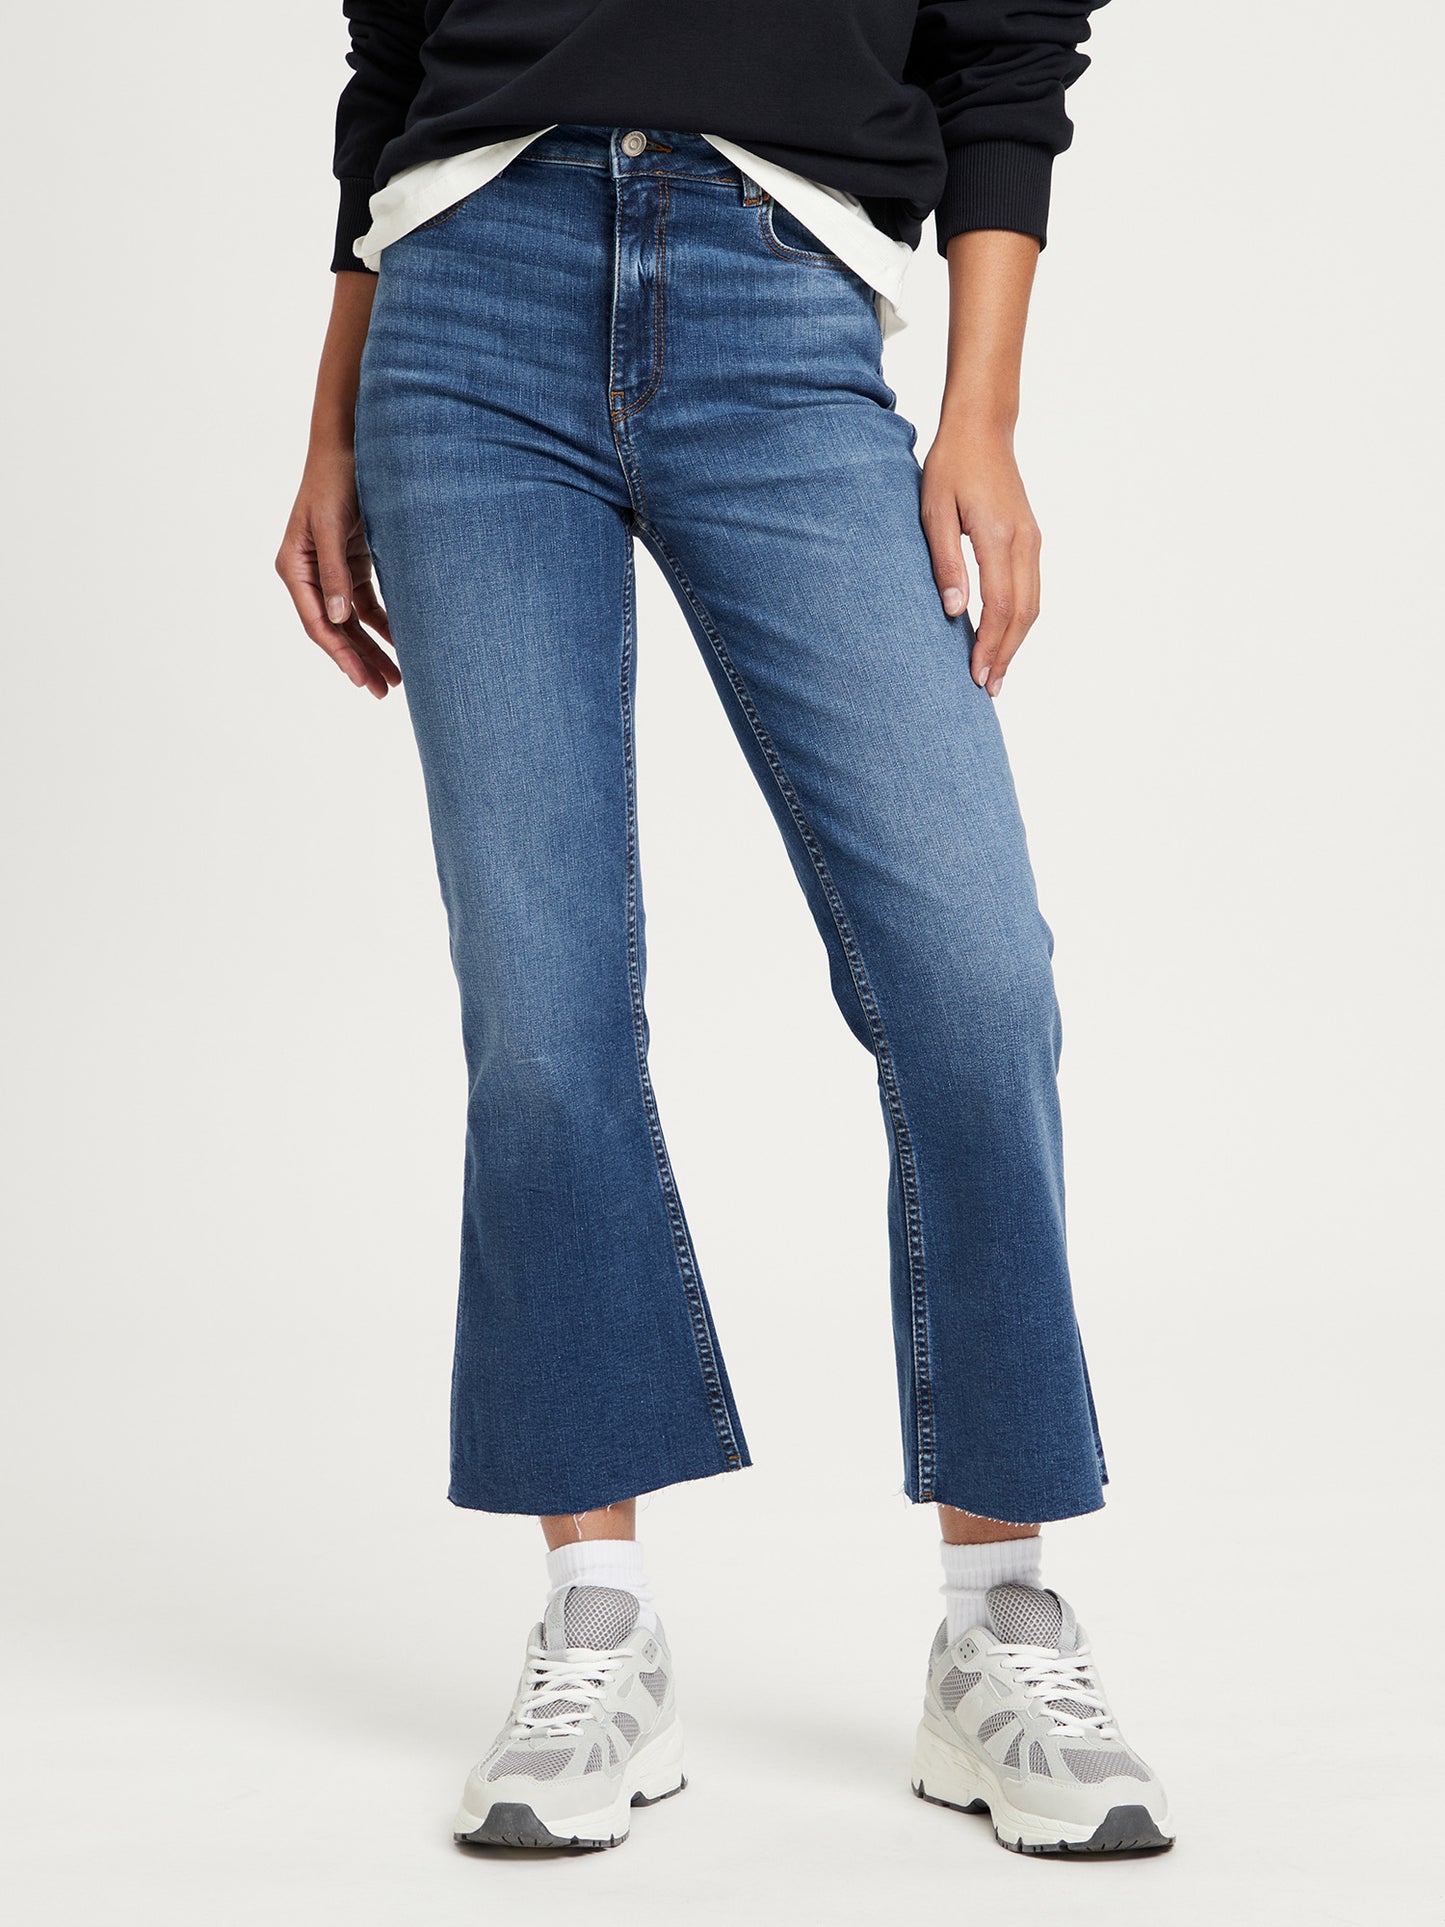 Women's jeans high waist cropped flare leg medium blue